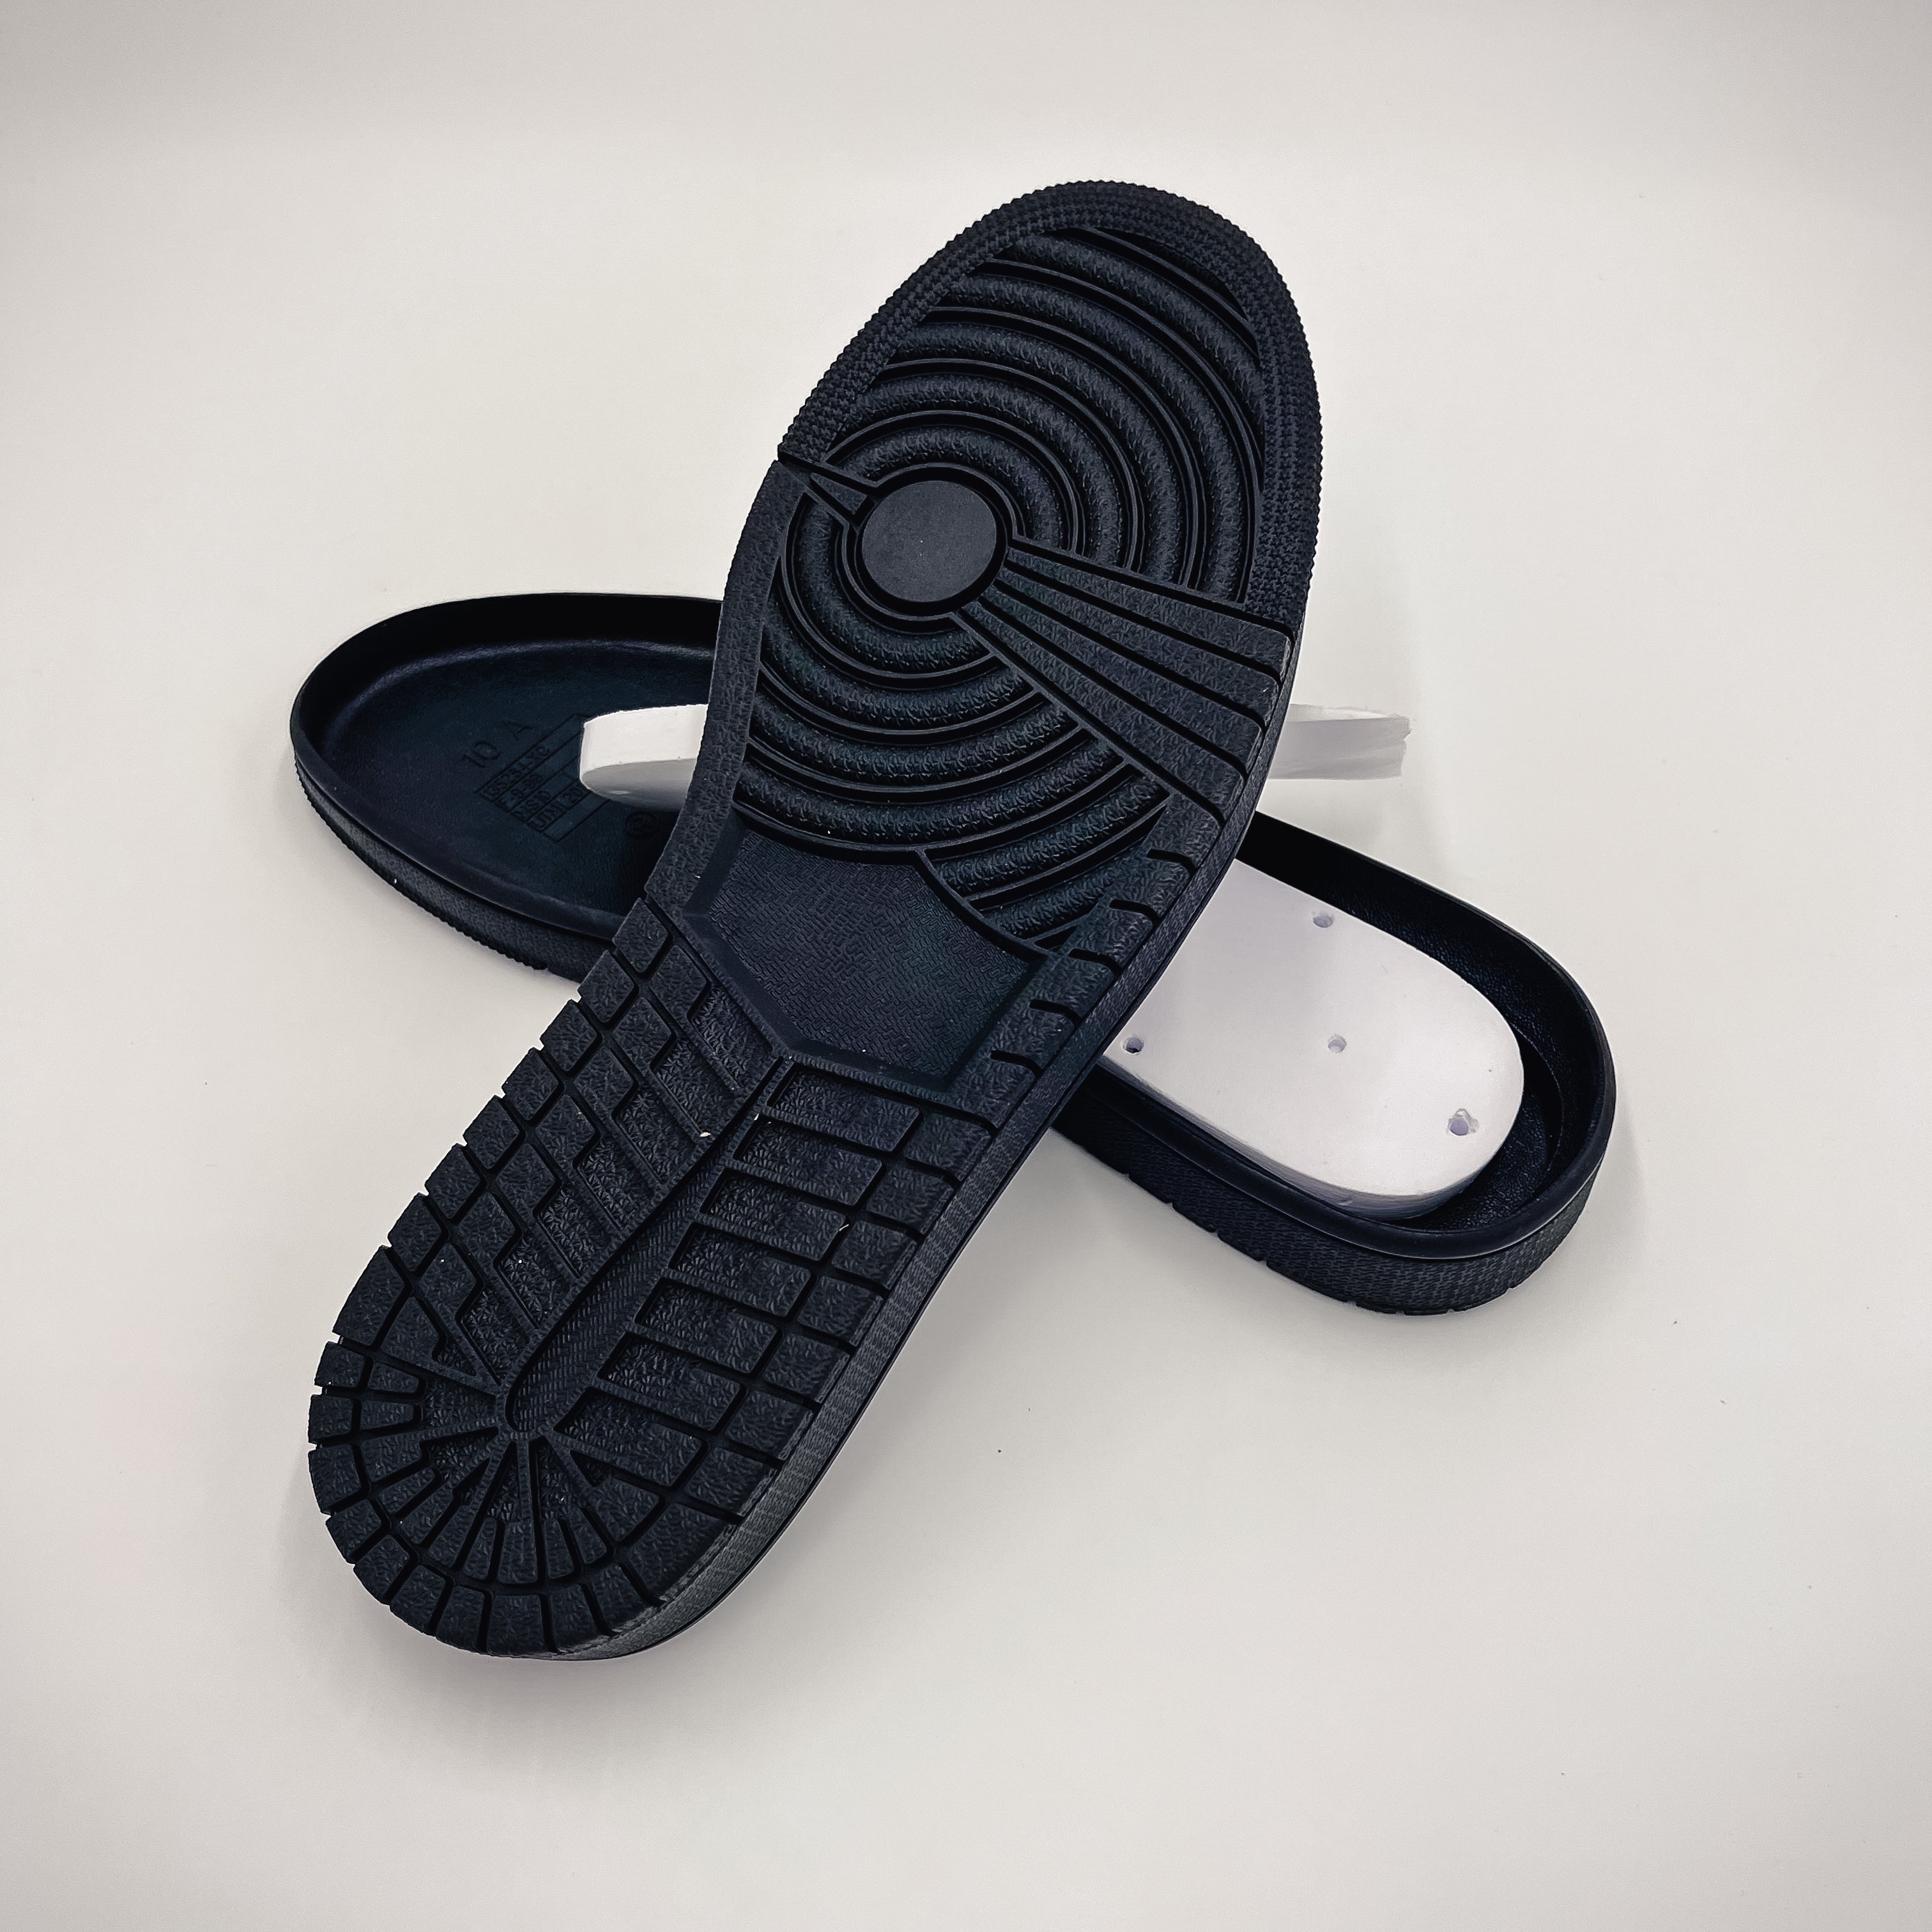 Basketball (AJ1) Shoe Soles, Black